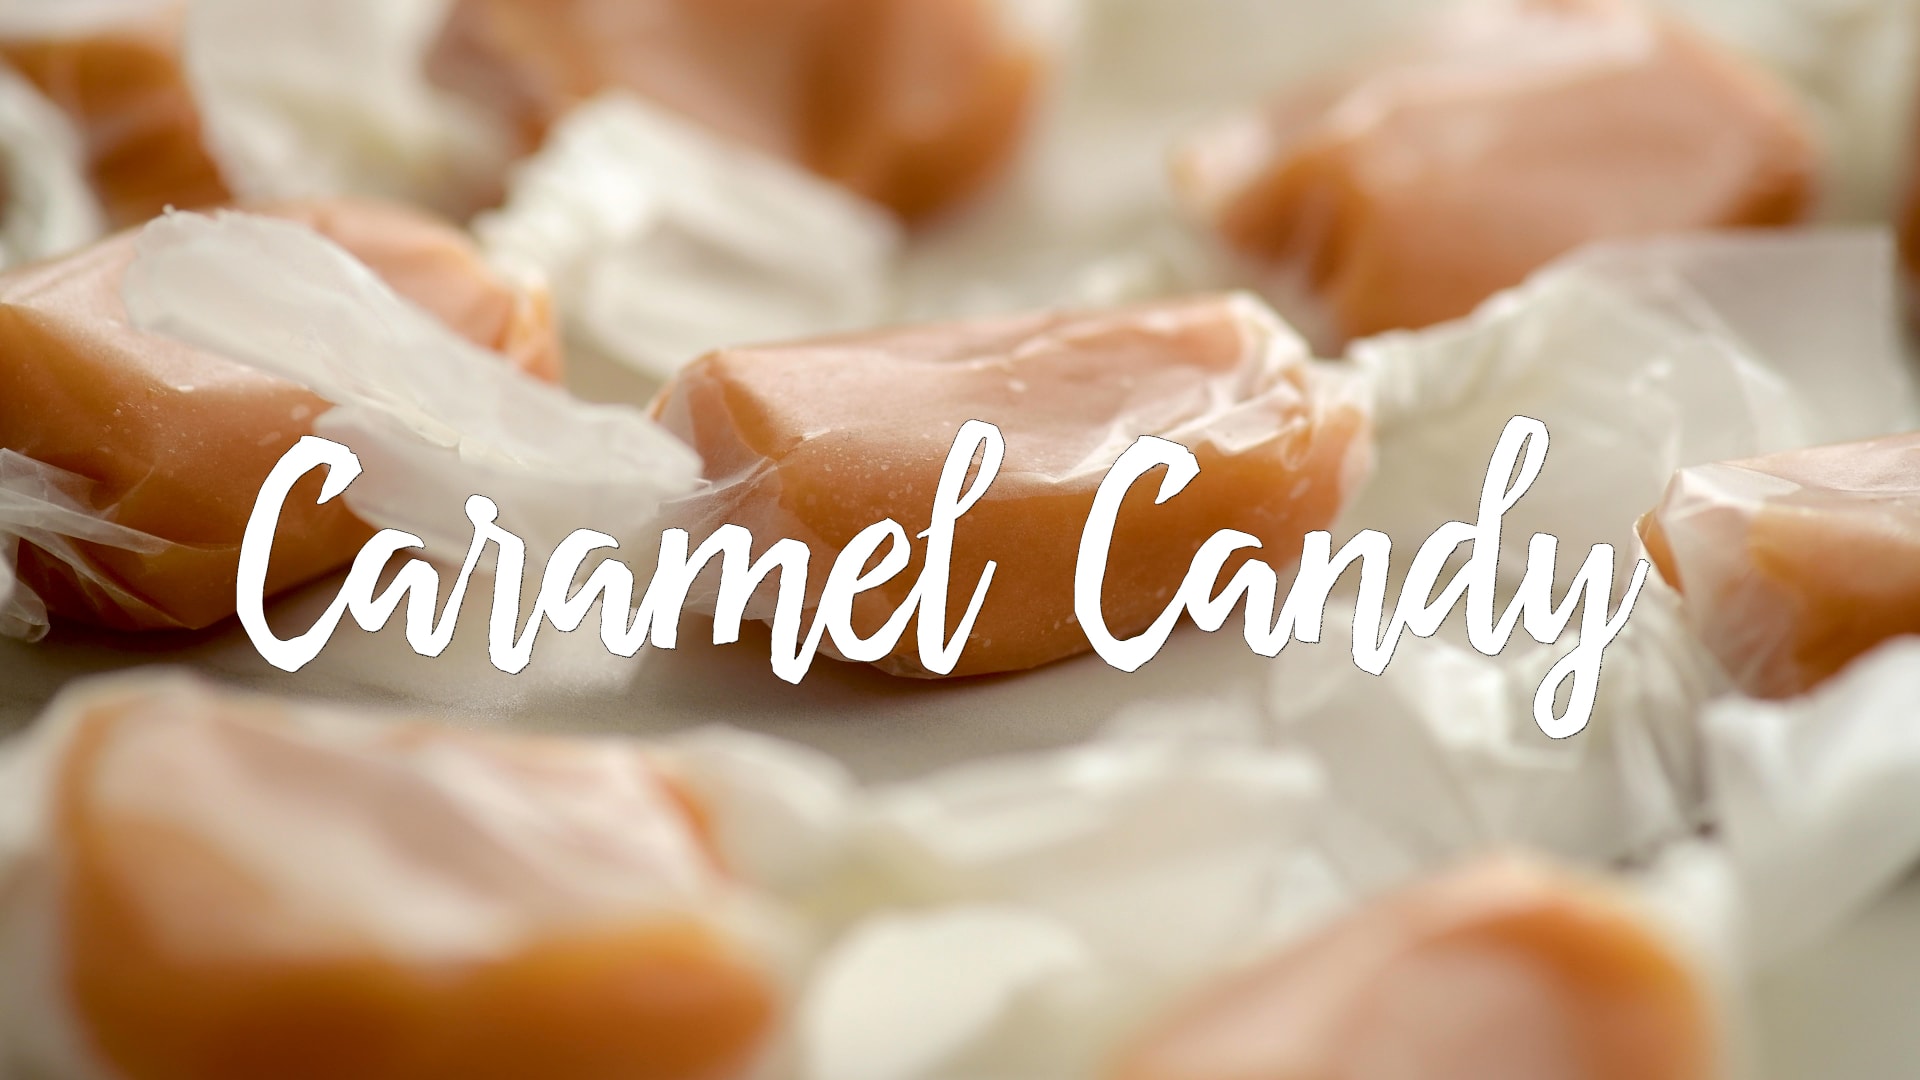 Caramel Candy Recipe - The Gunny Sack